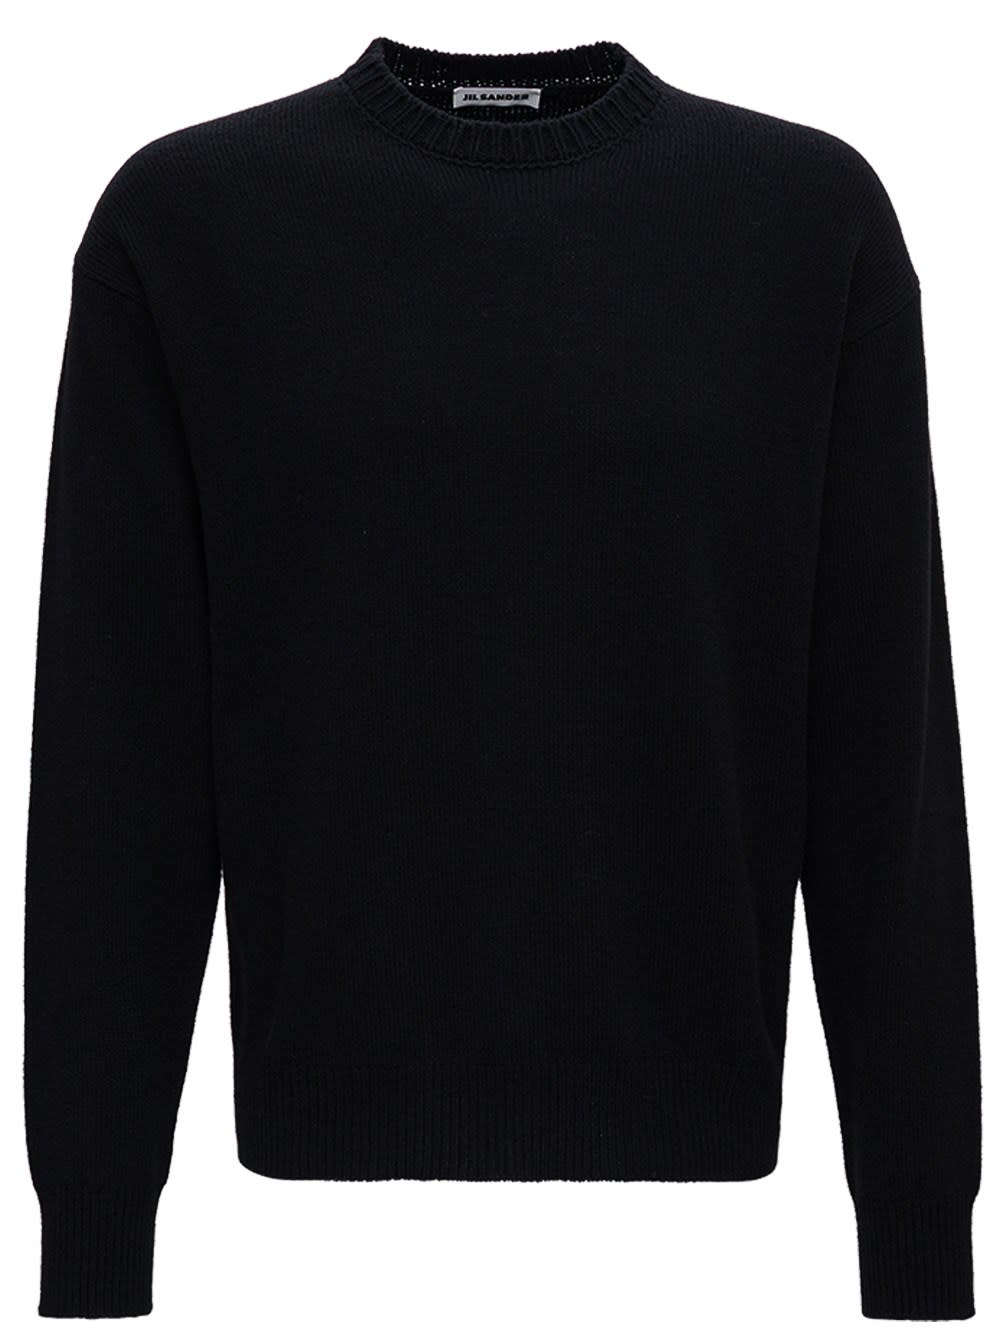 Jil Sander Black Wool And Cashmere Sweater